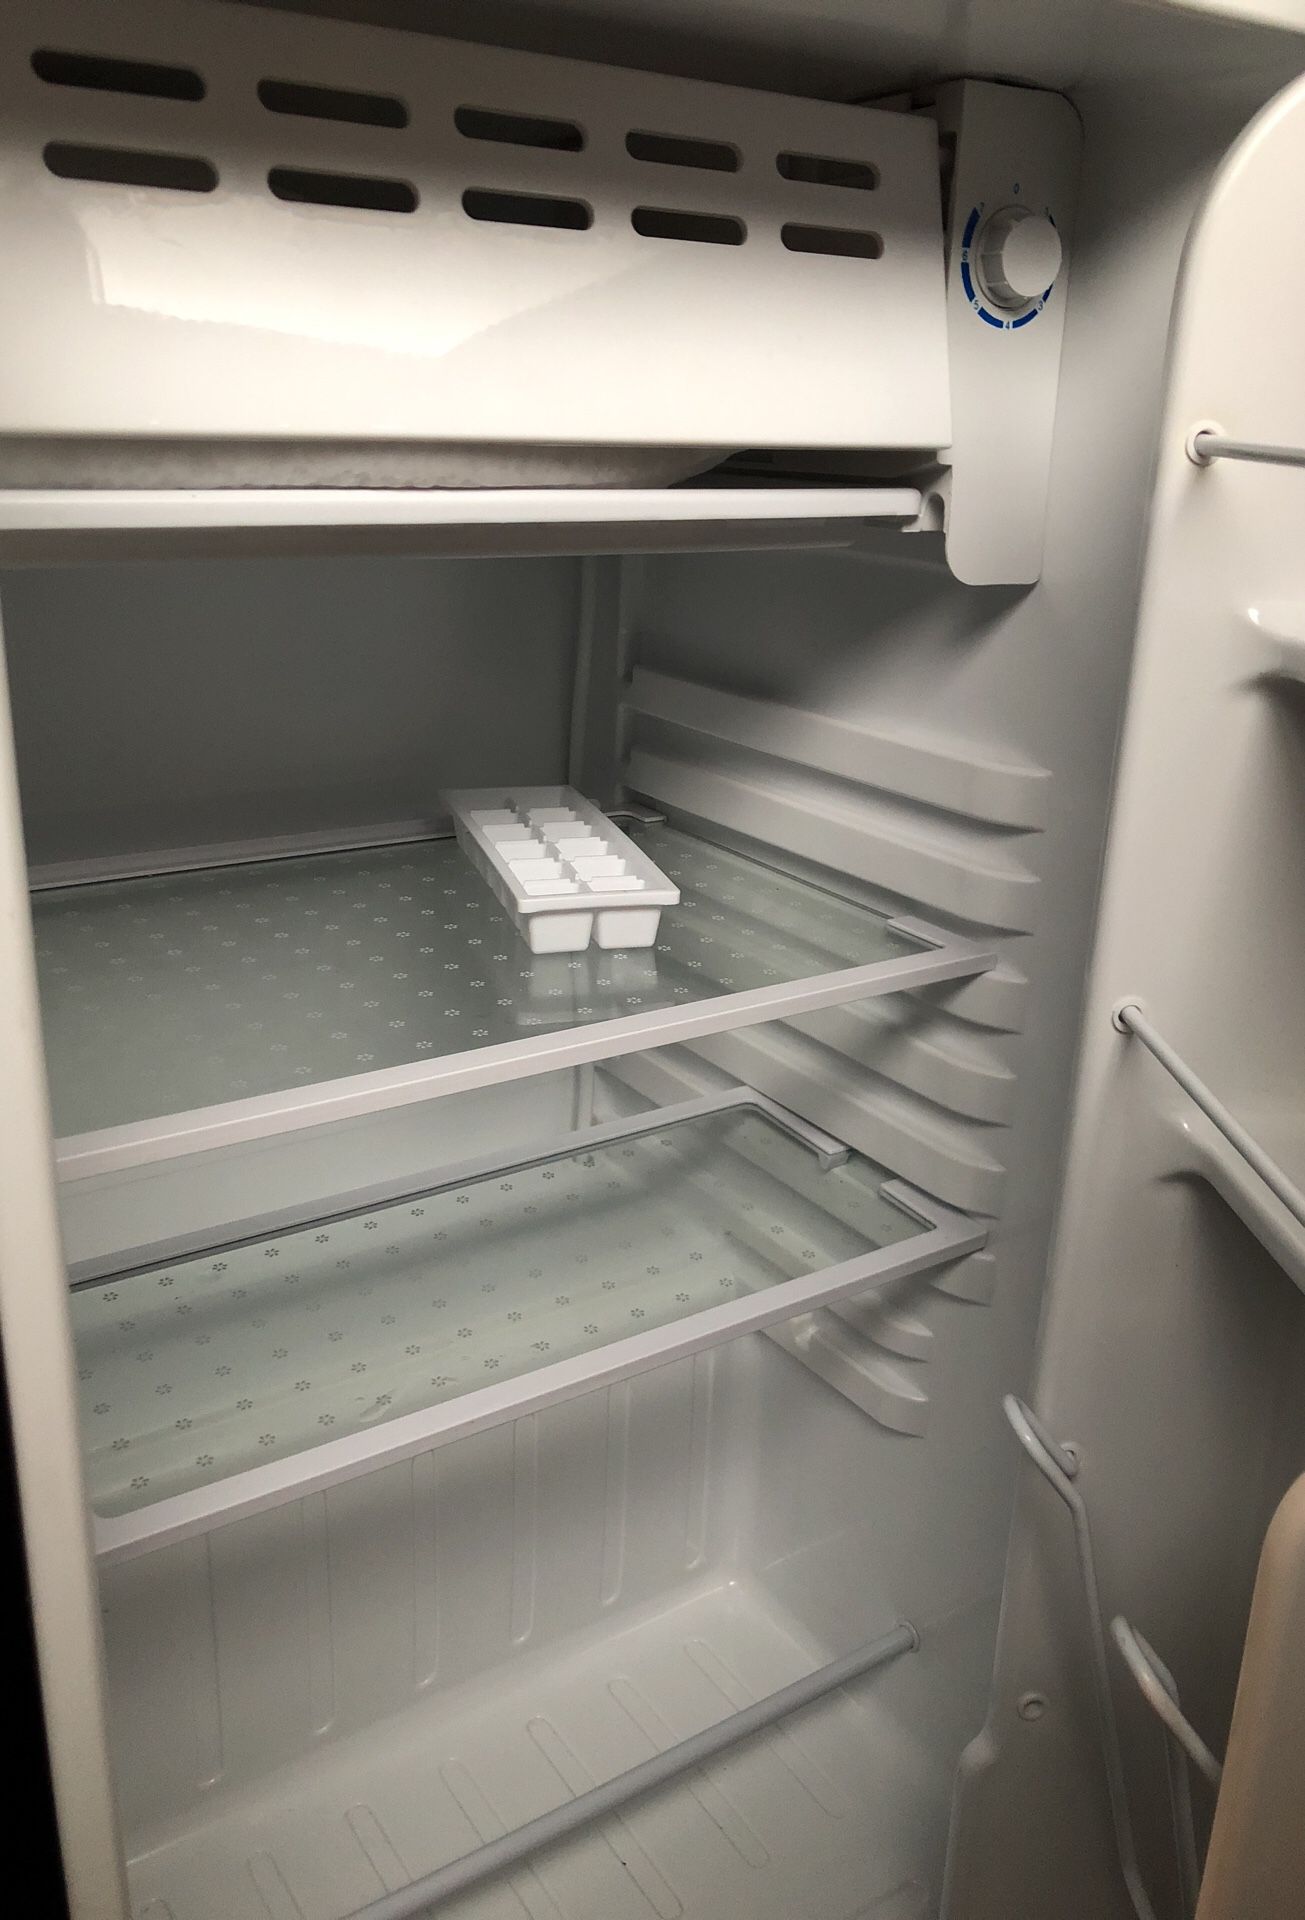 Igloo mini refrigerator